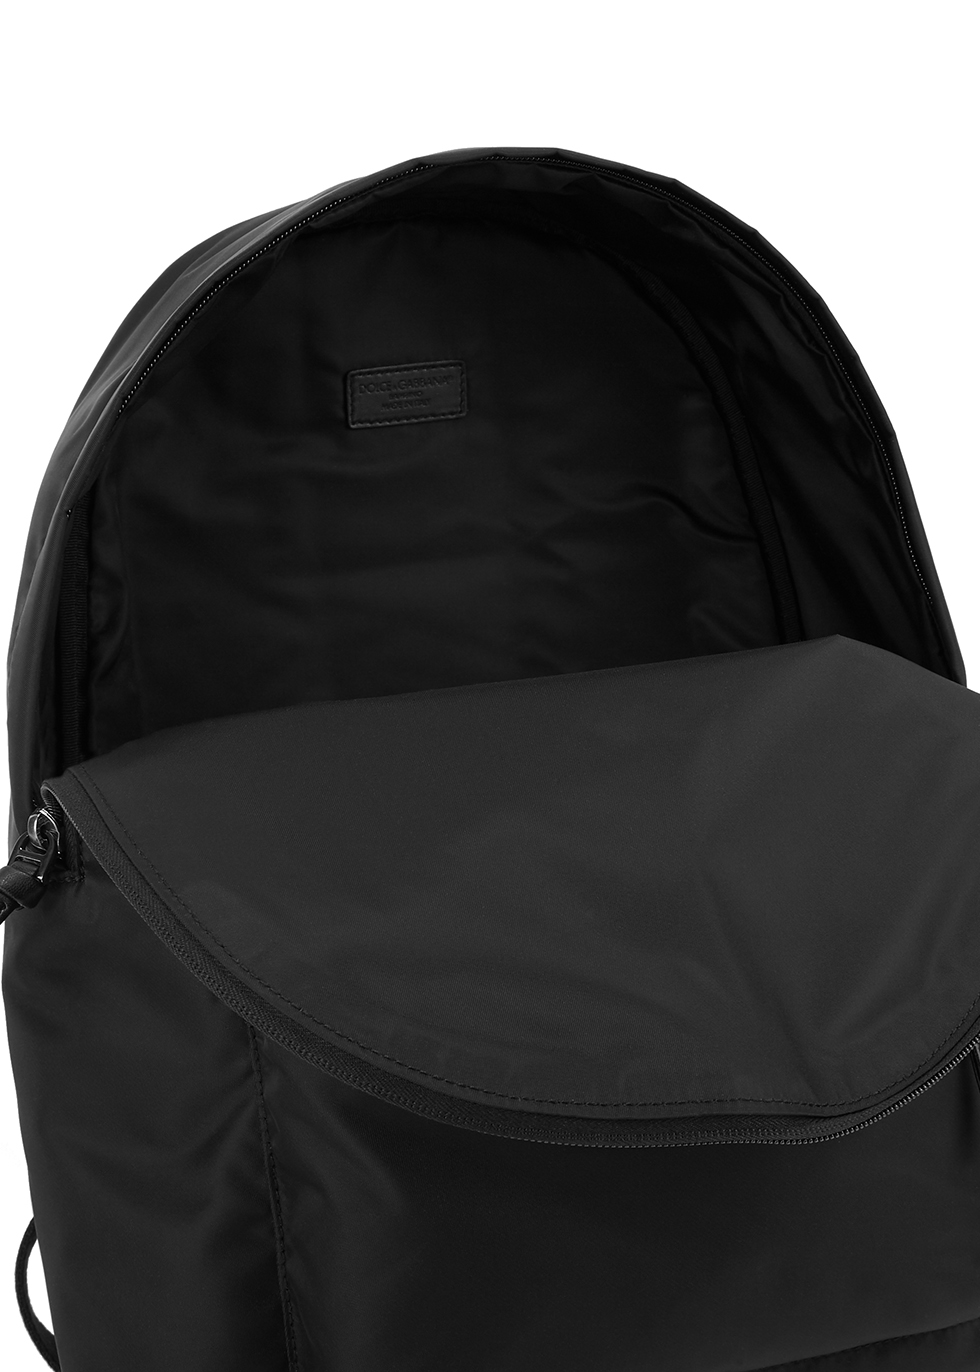 Harvey Nichols Accessories Bags Luggage KIDS Black logo nylon backpack 